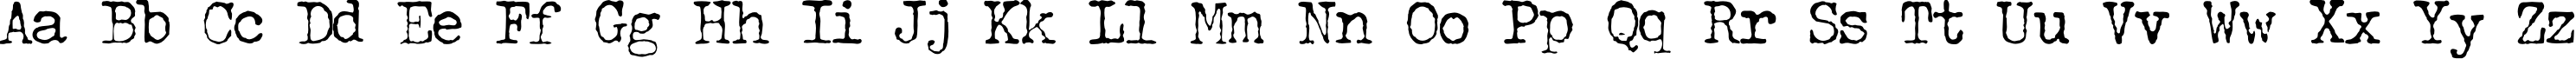 Пример написания английского алфавита шрифтом JohnDoe